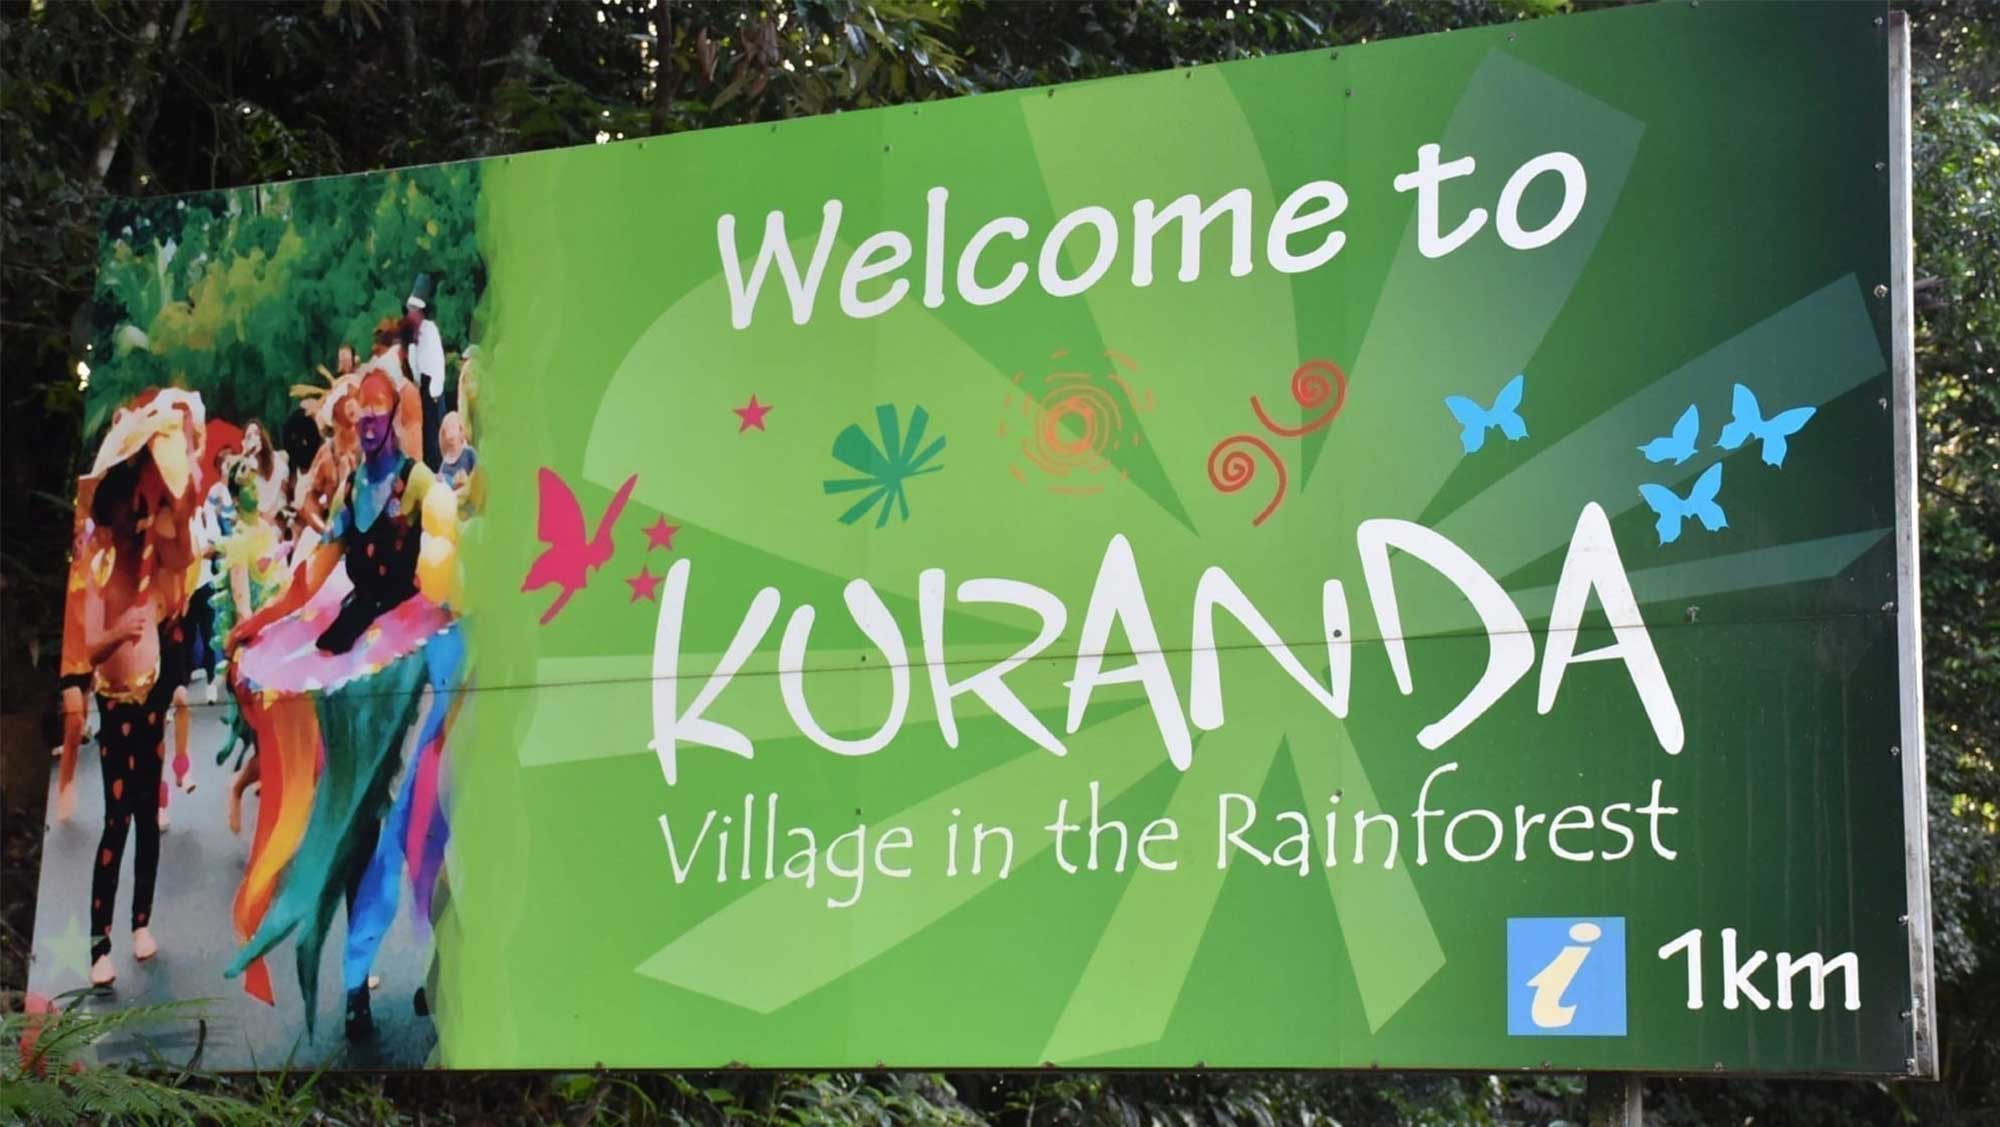 Bang to lead the tourism marketing of Kuranda